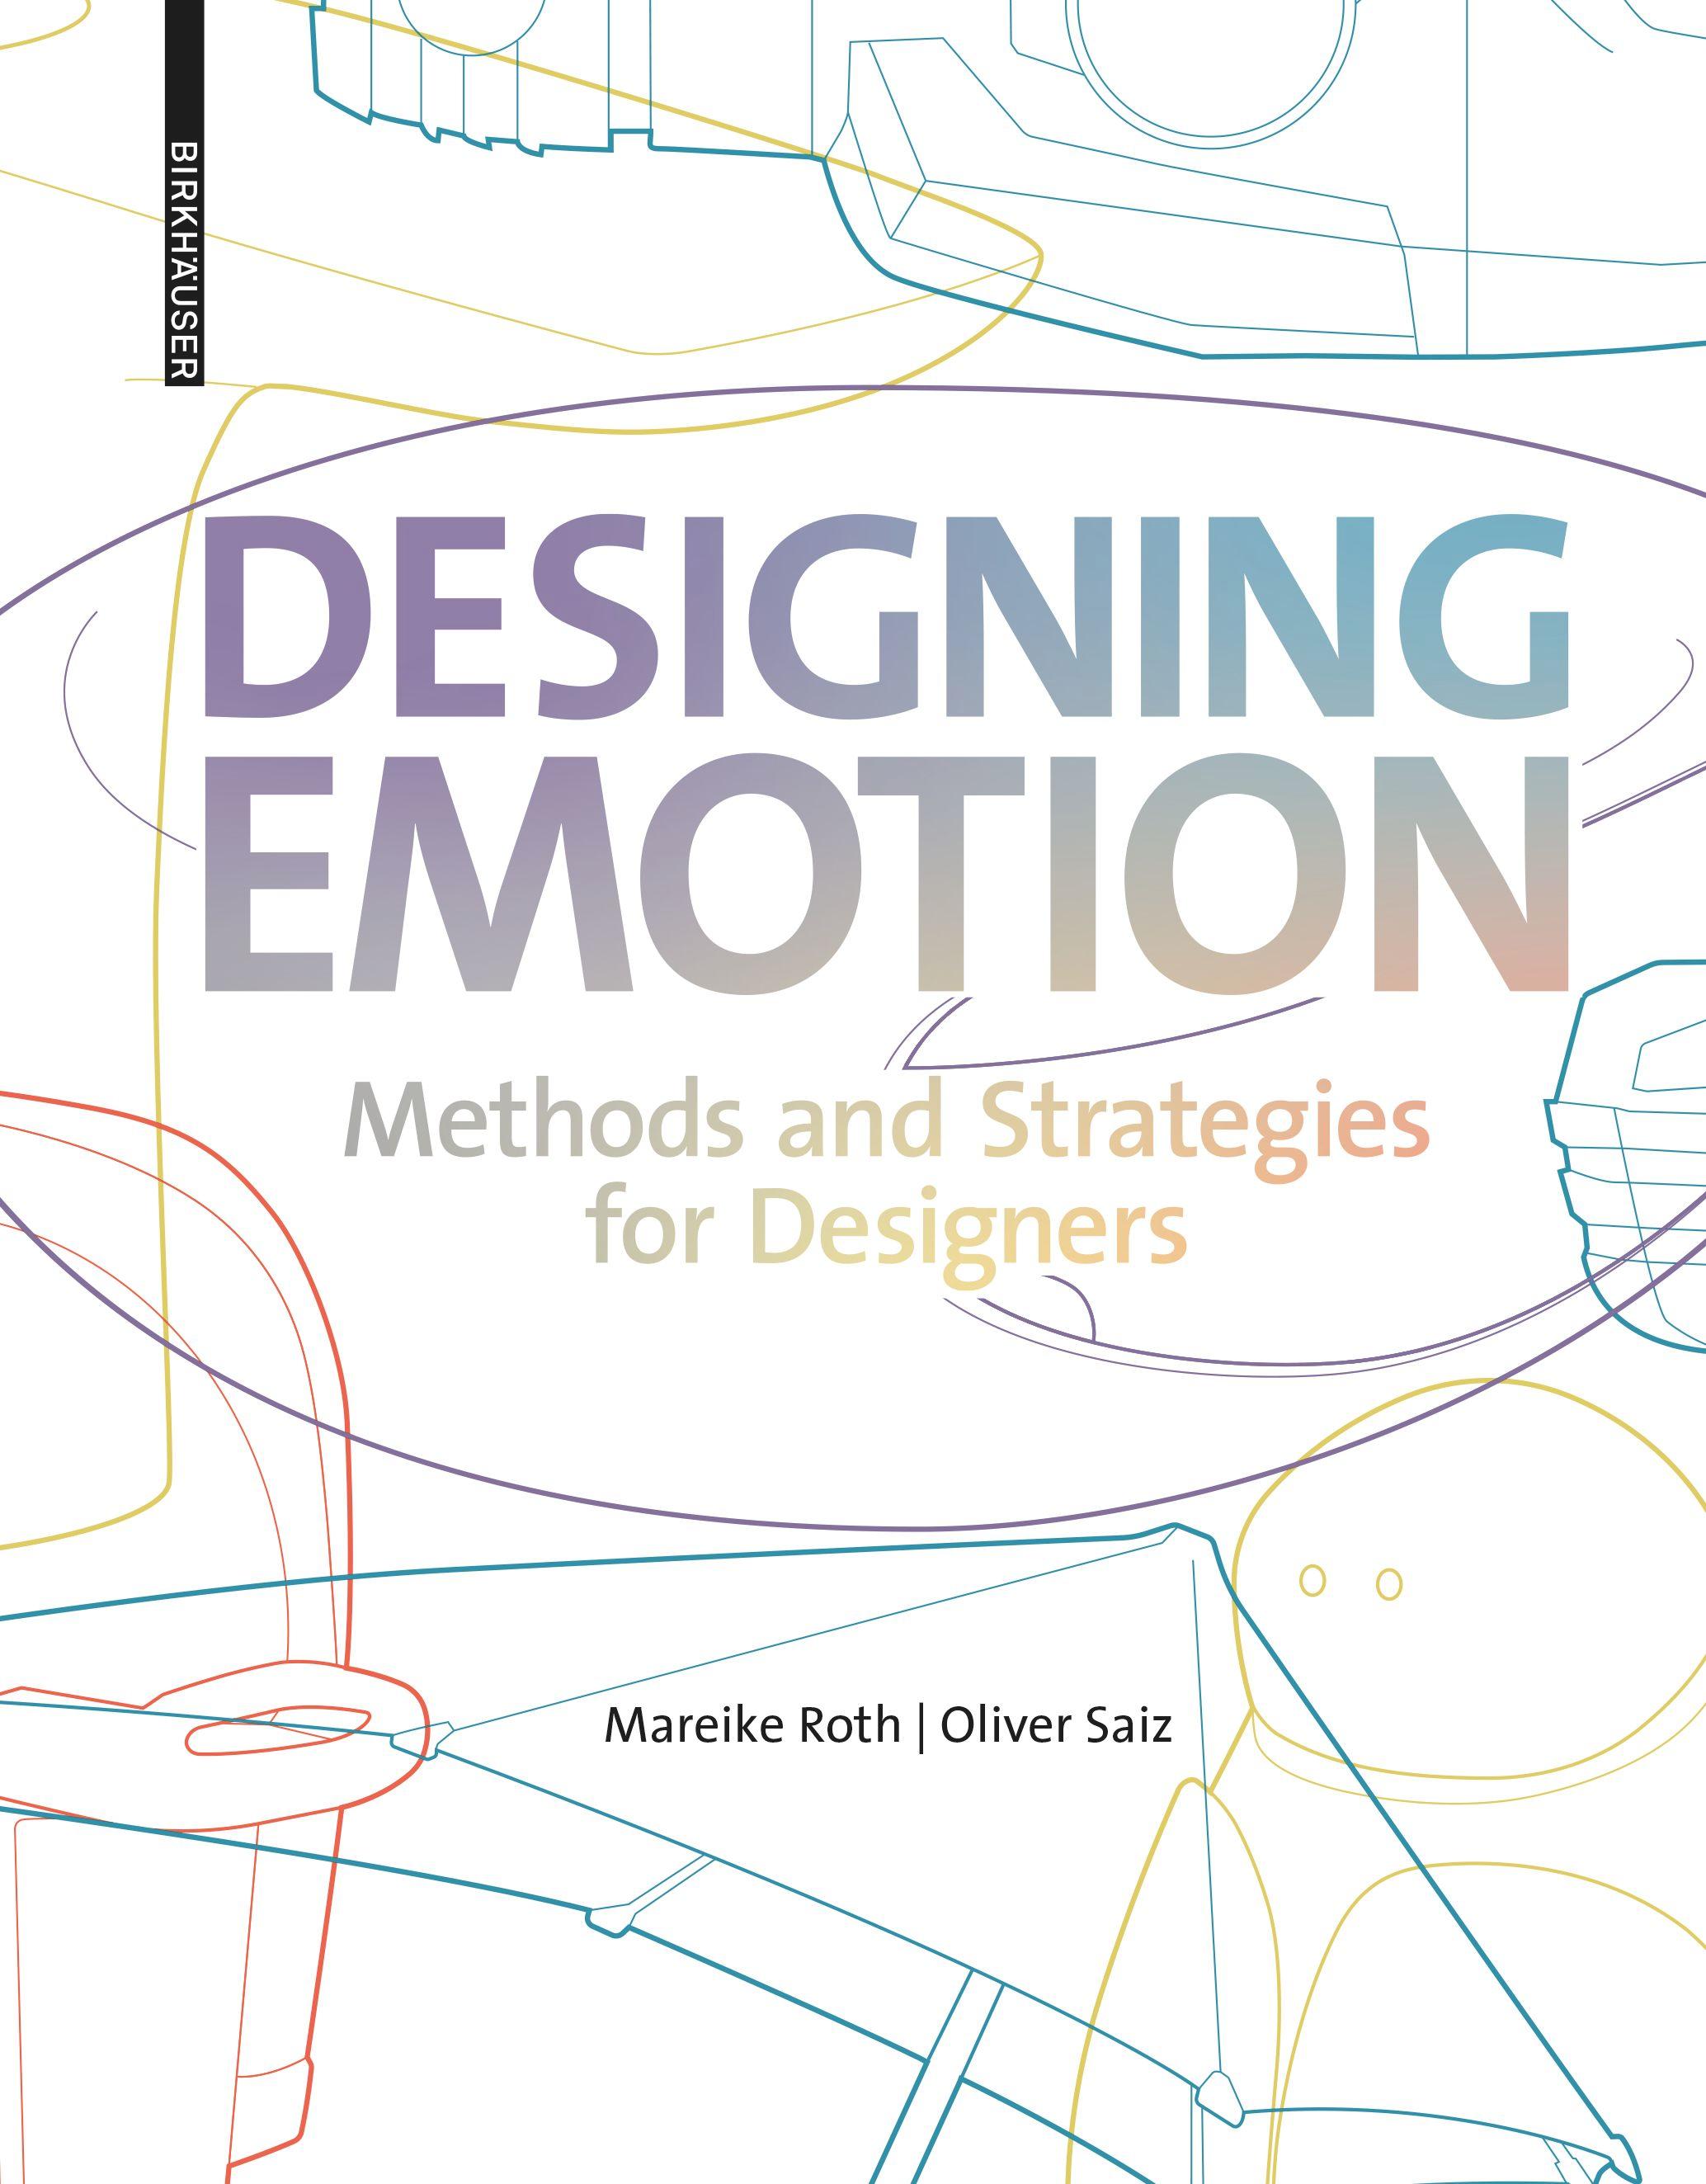 Designing Emotion's cover